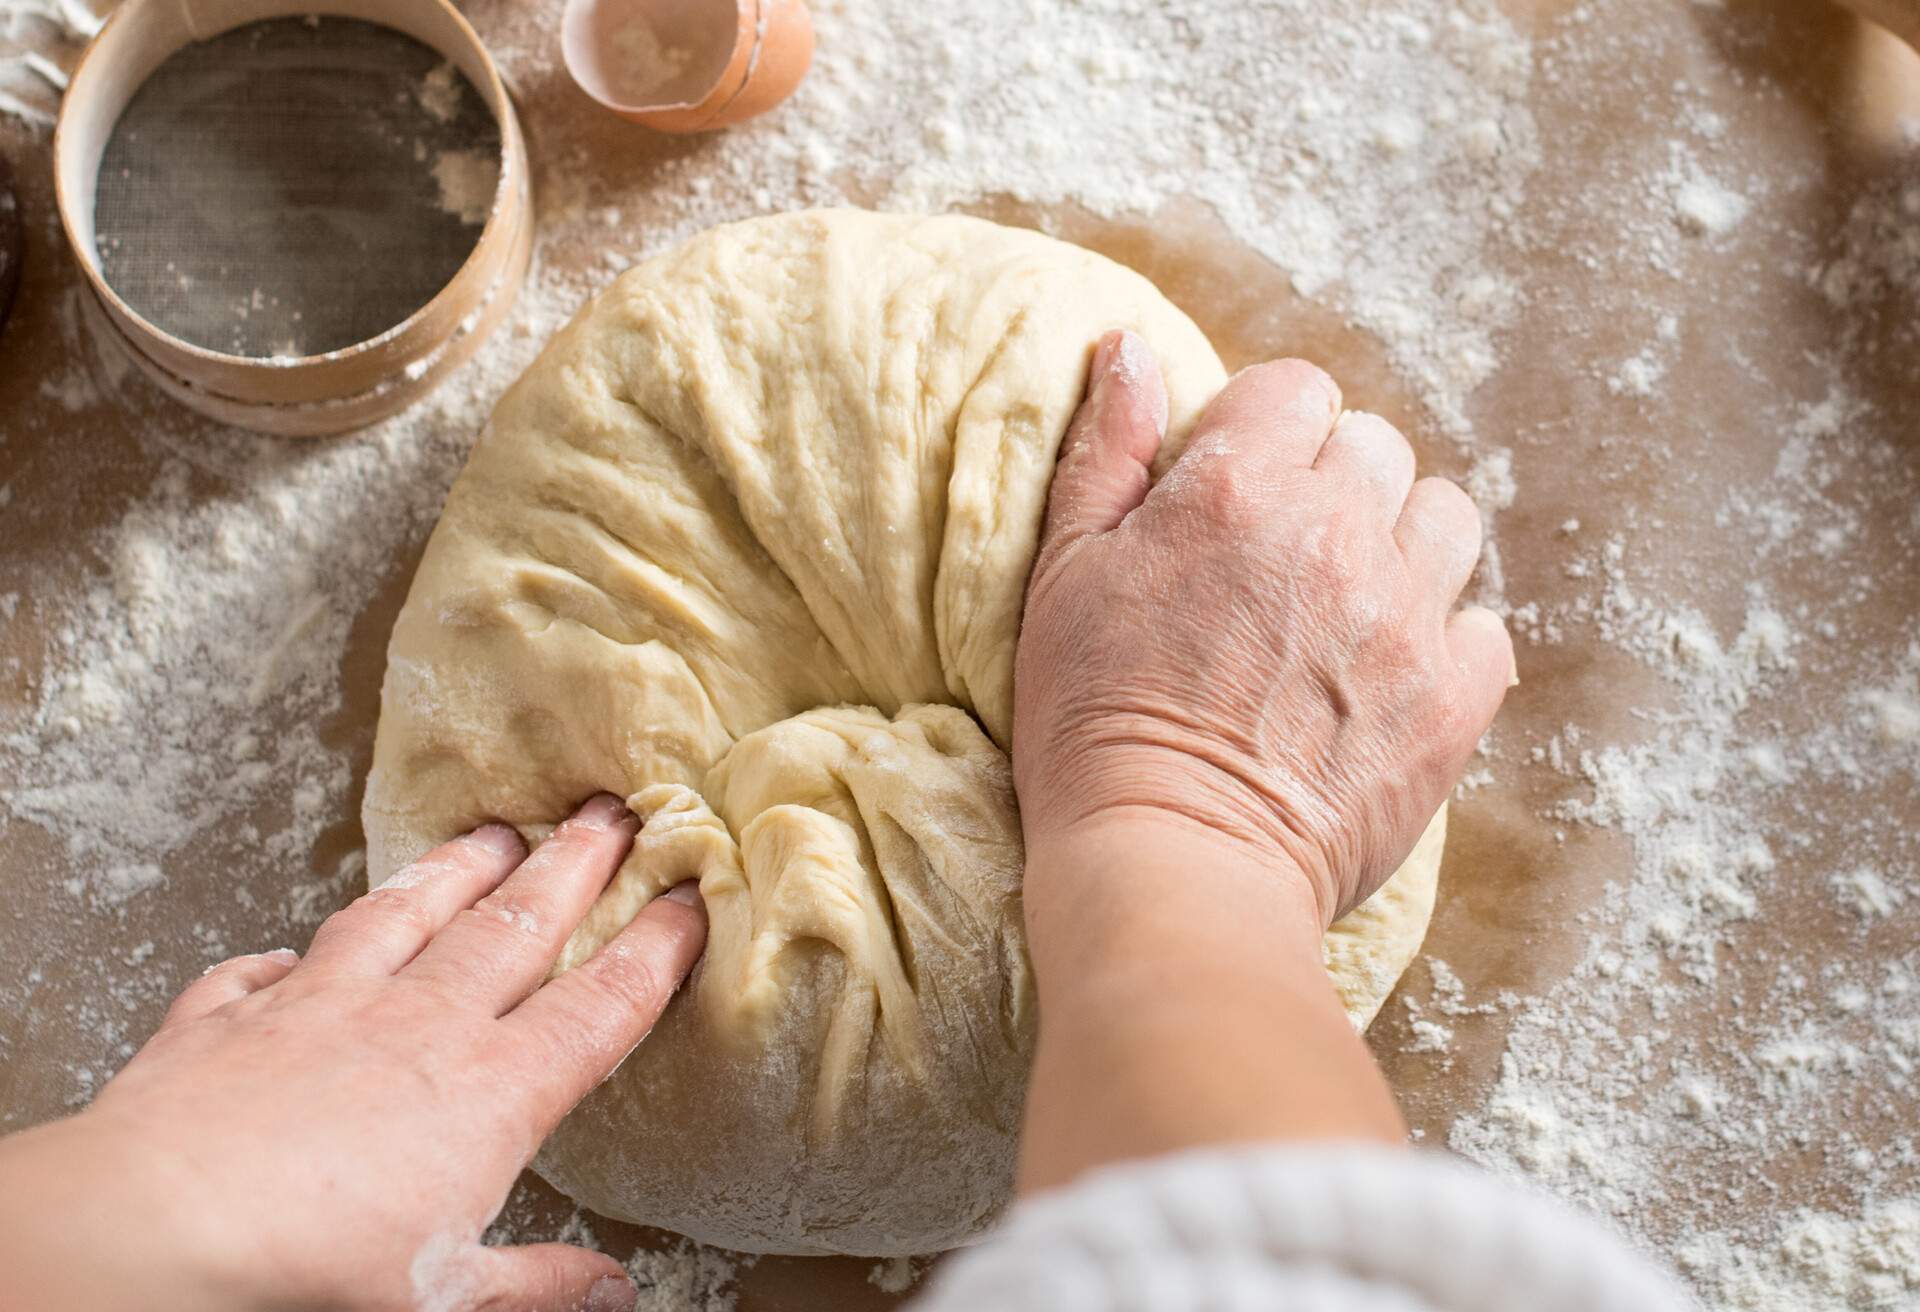 Woman kneading dough in kitchen